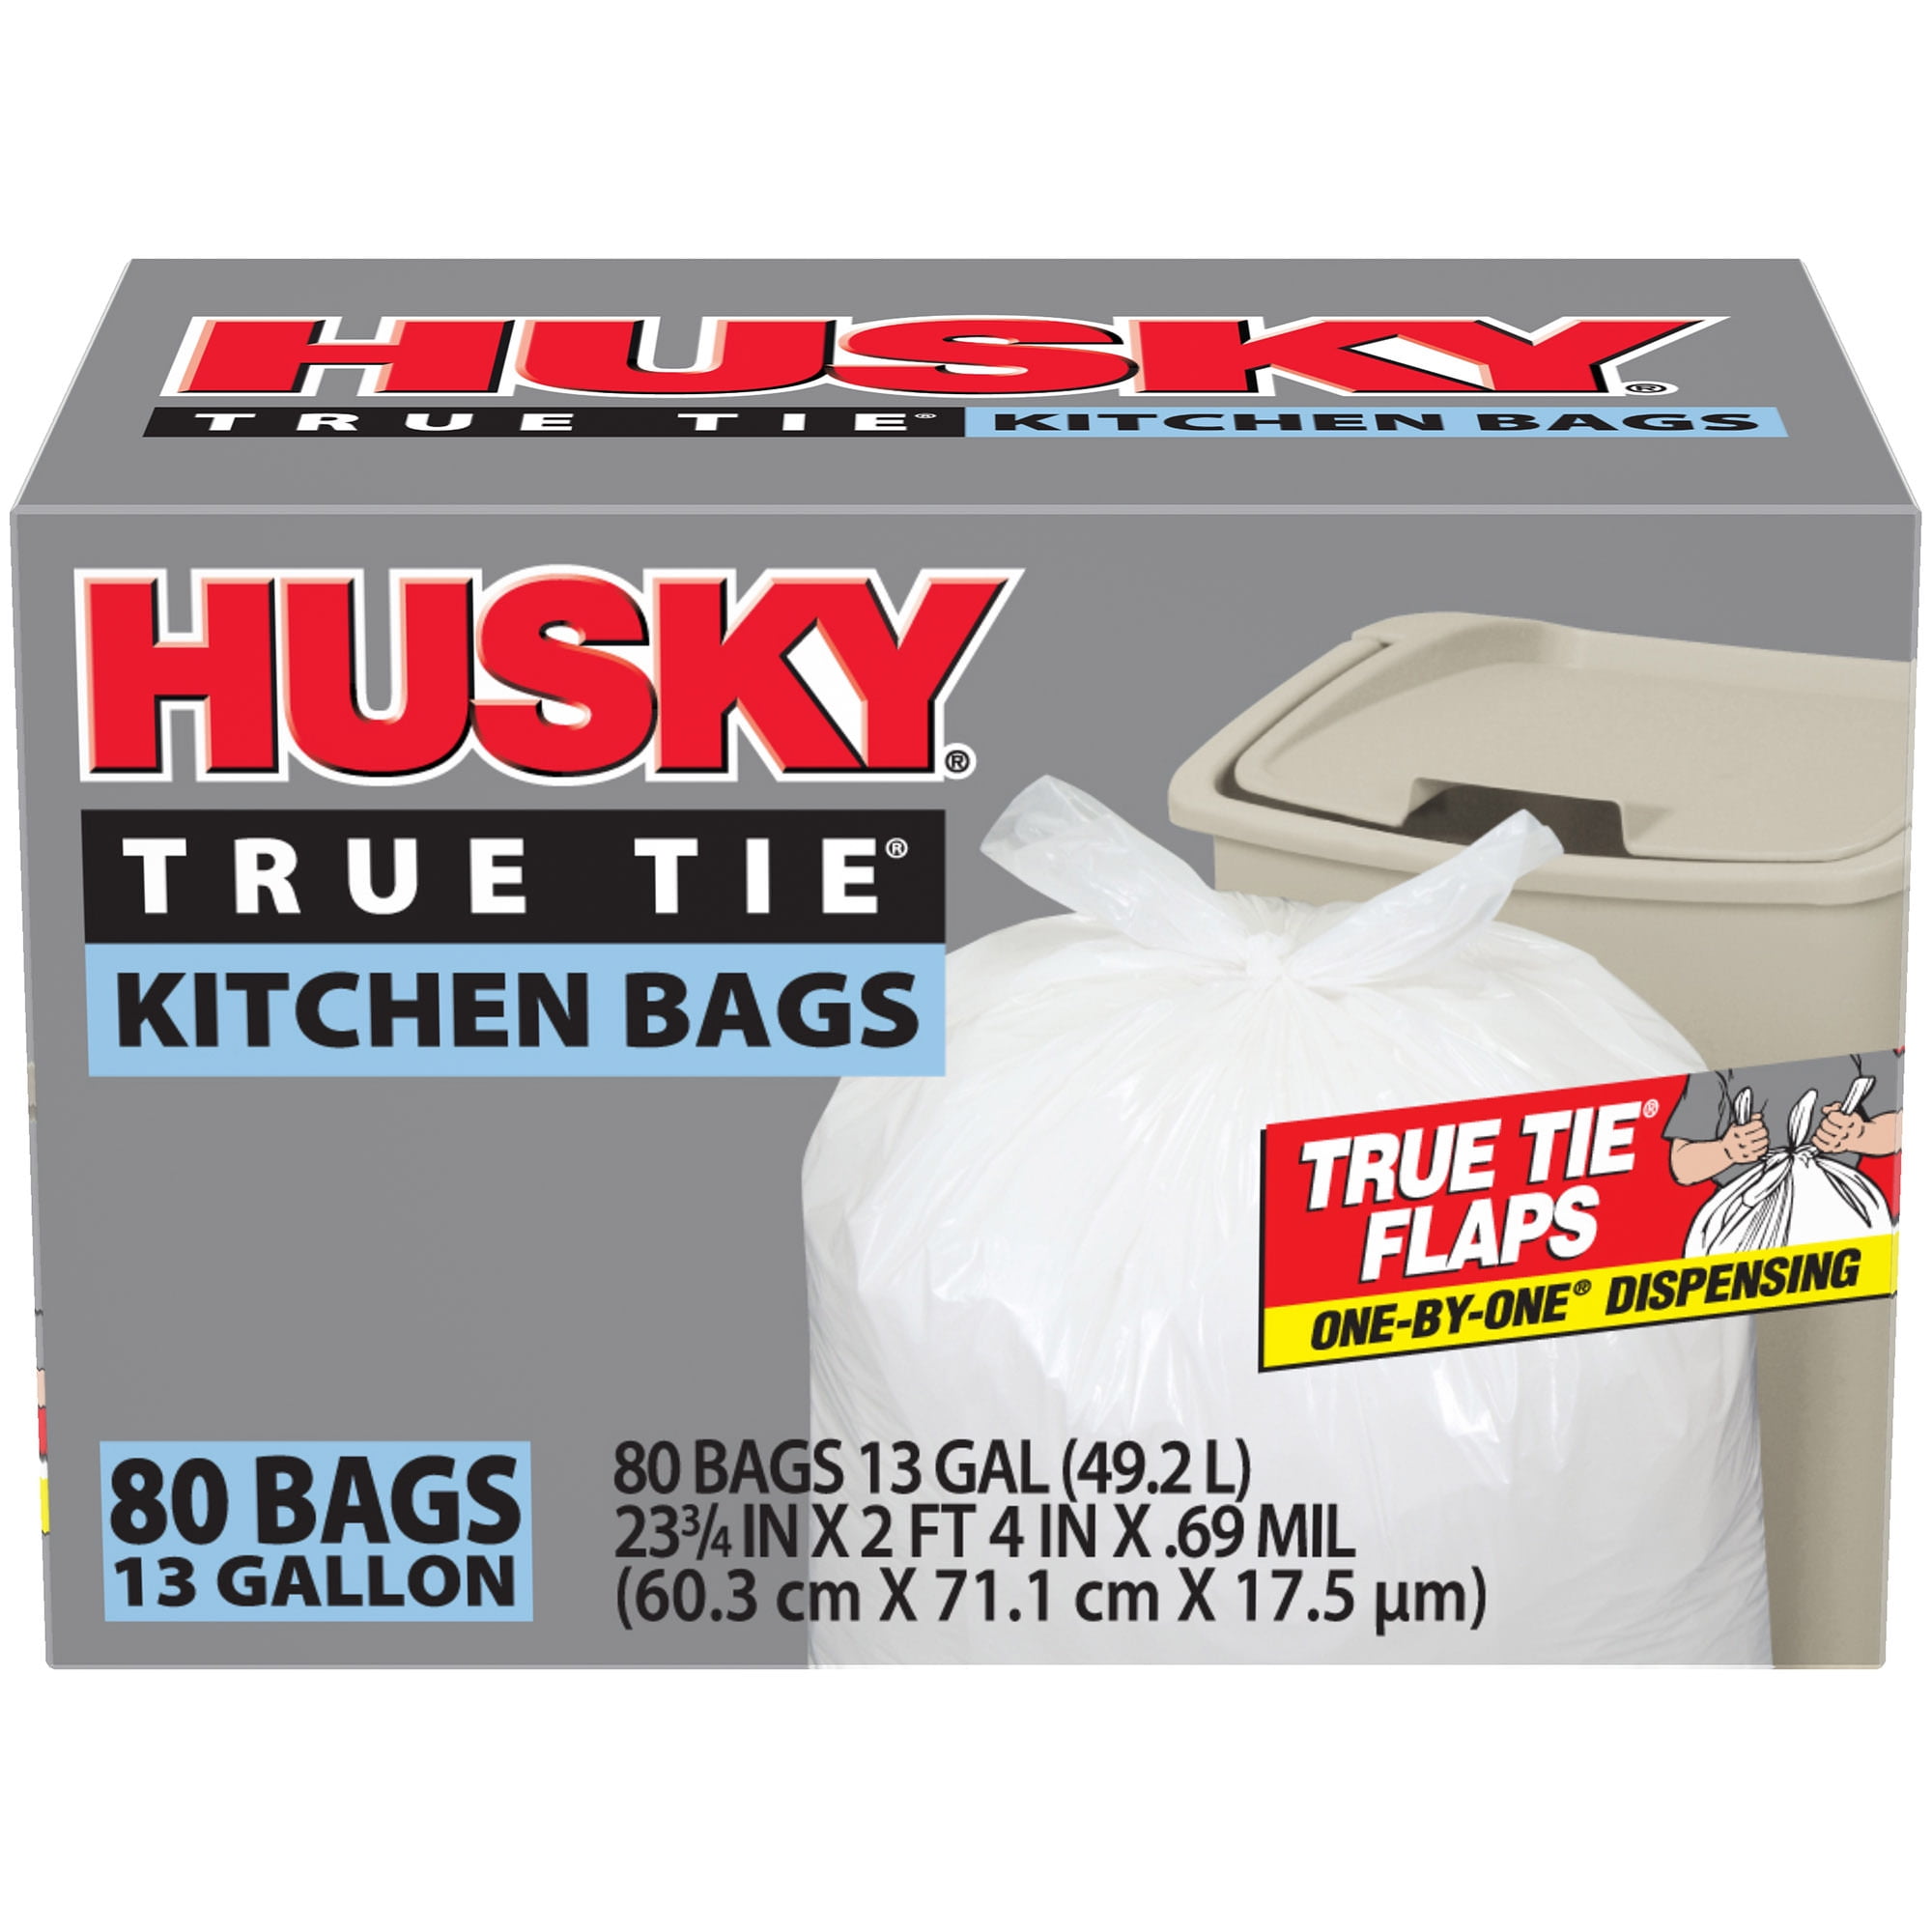 Husky Tall Kitchen Trash Bags, 13 Gallon, 120 Bags (Expandable